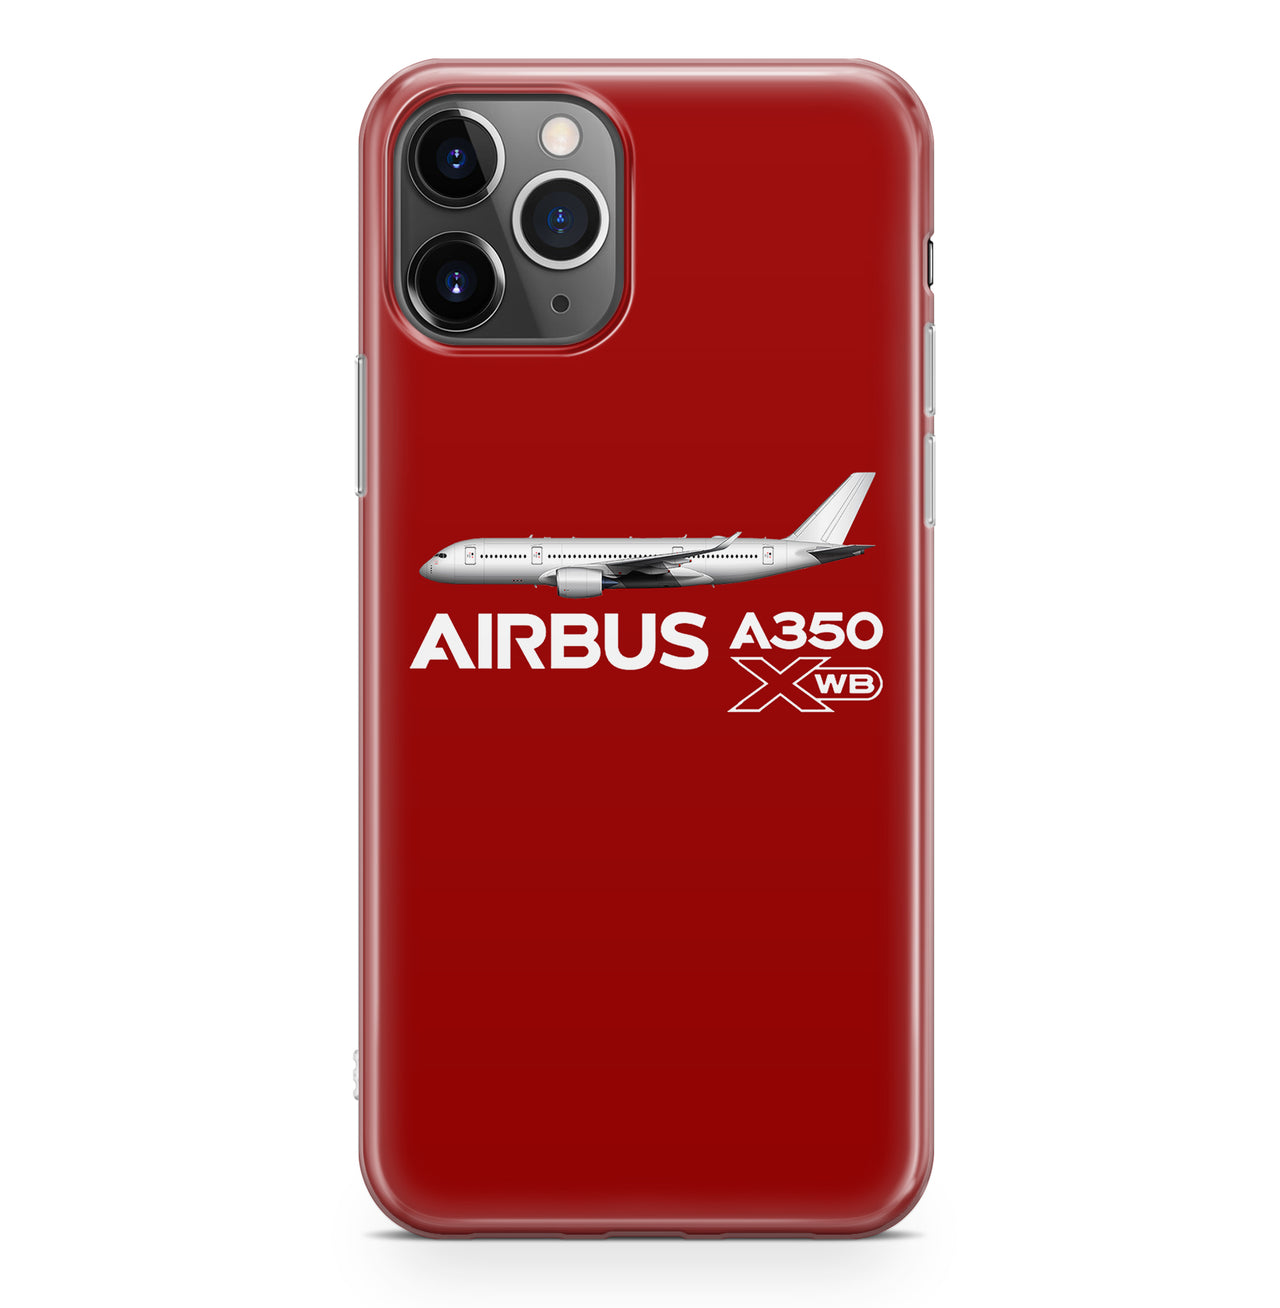 The Airbus A350 WXB Designed iPhone Cases